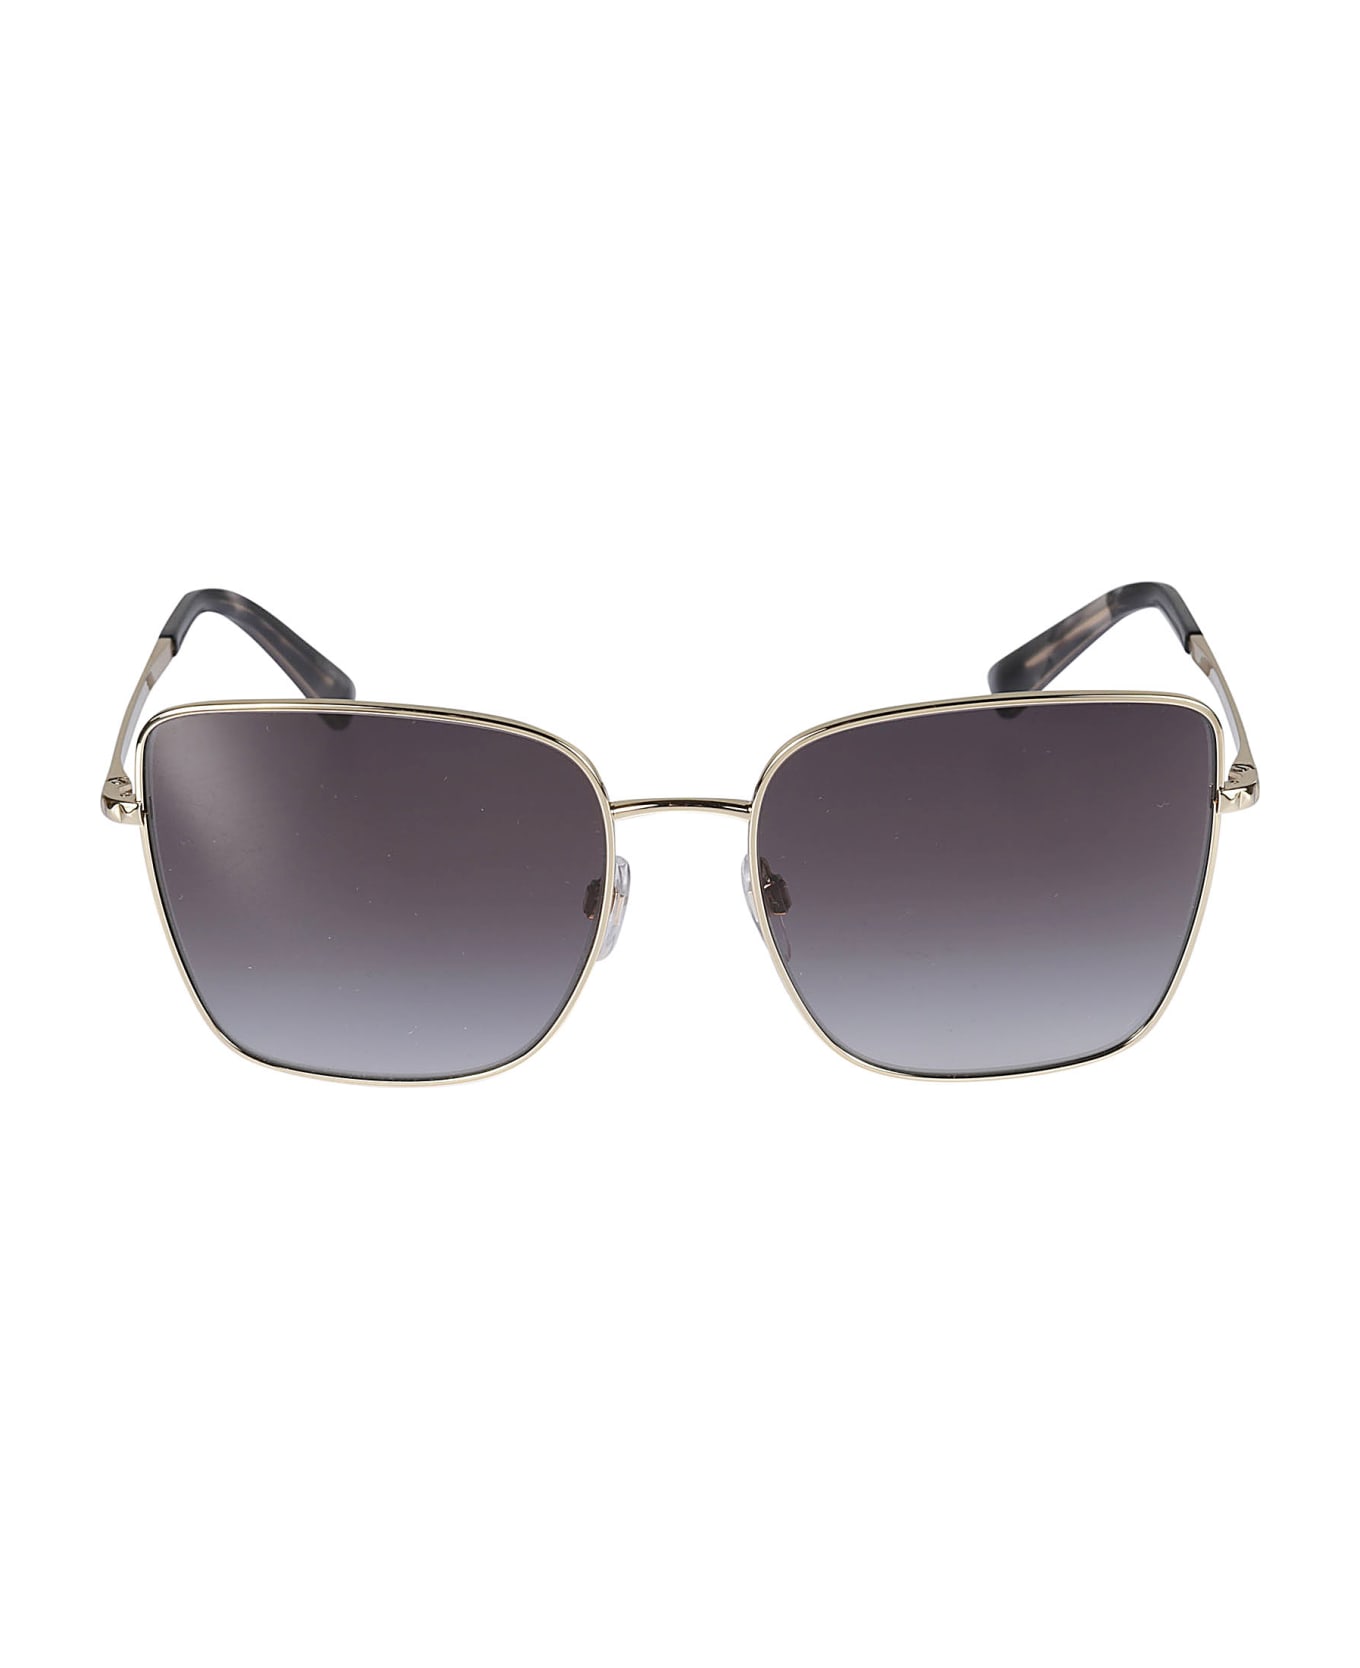 Valentino Eyewear Sole30038g Sunglasses - 30038g